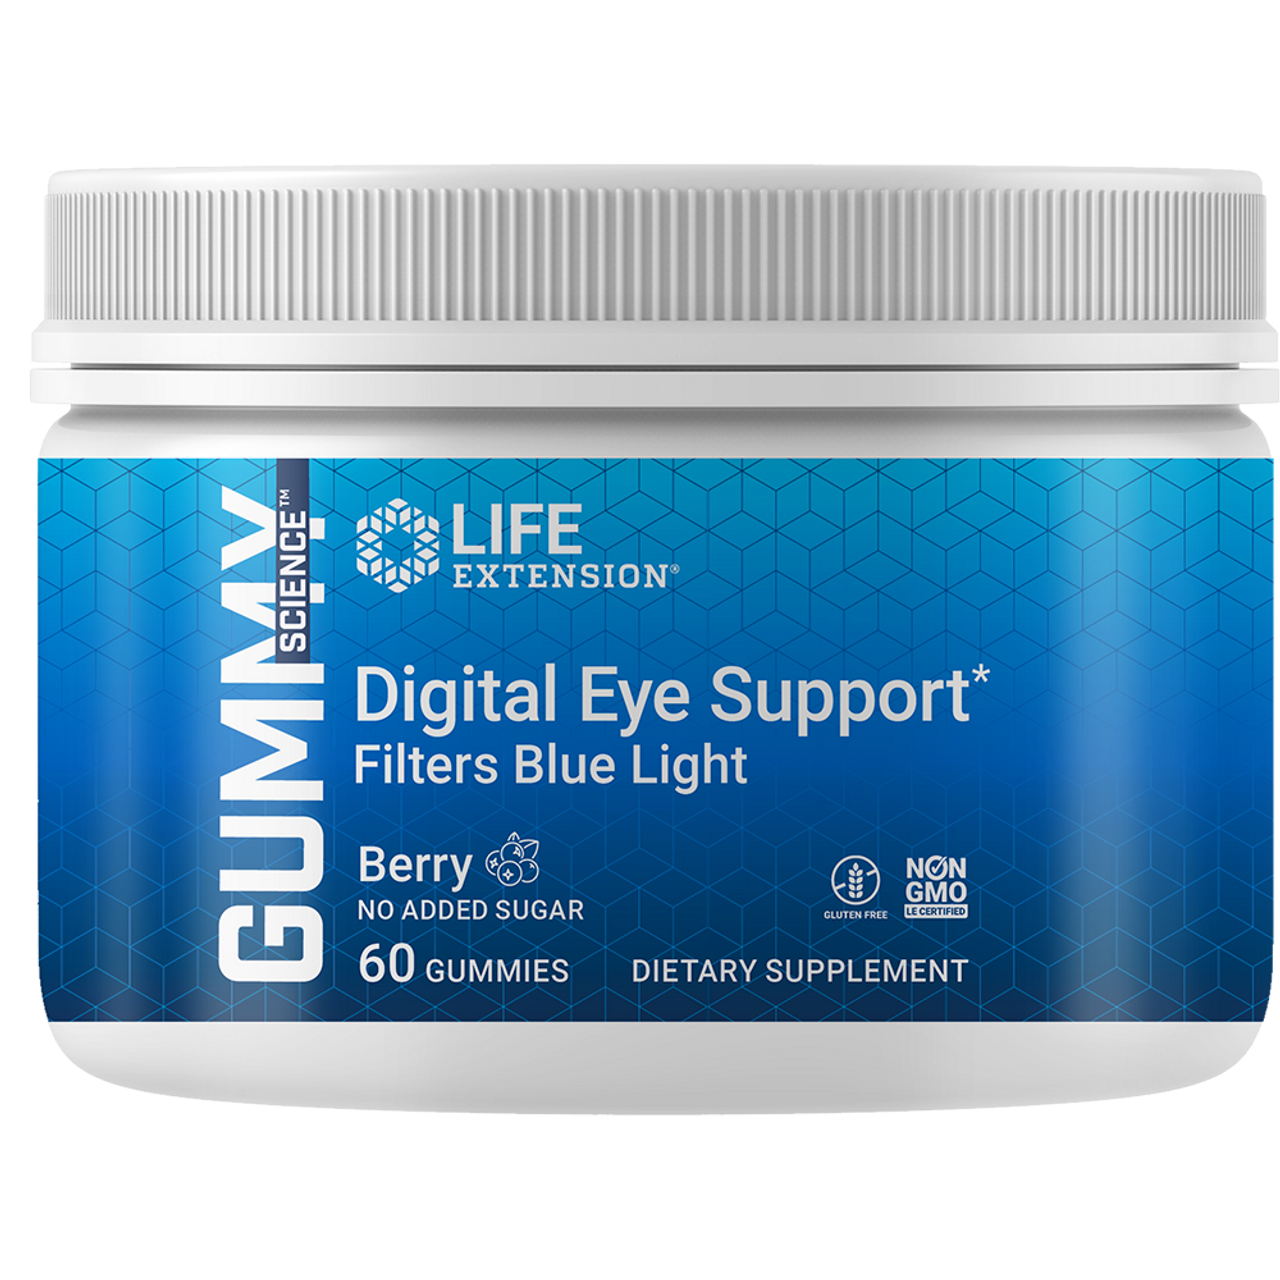 Gummy Science Digital Eye Support* 60 gummies